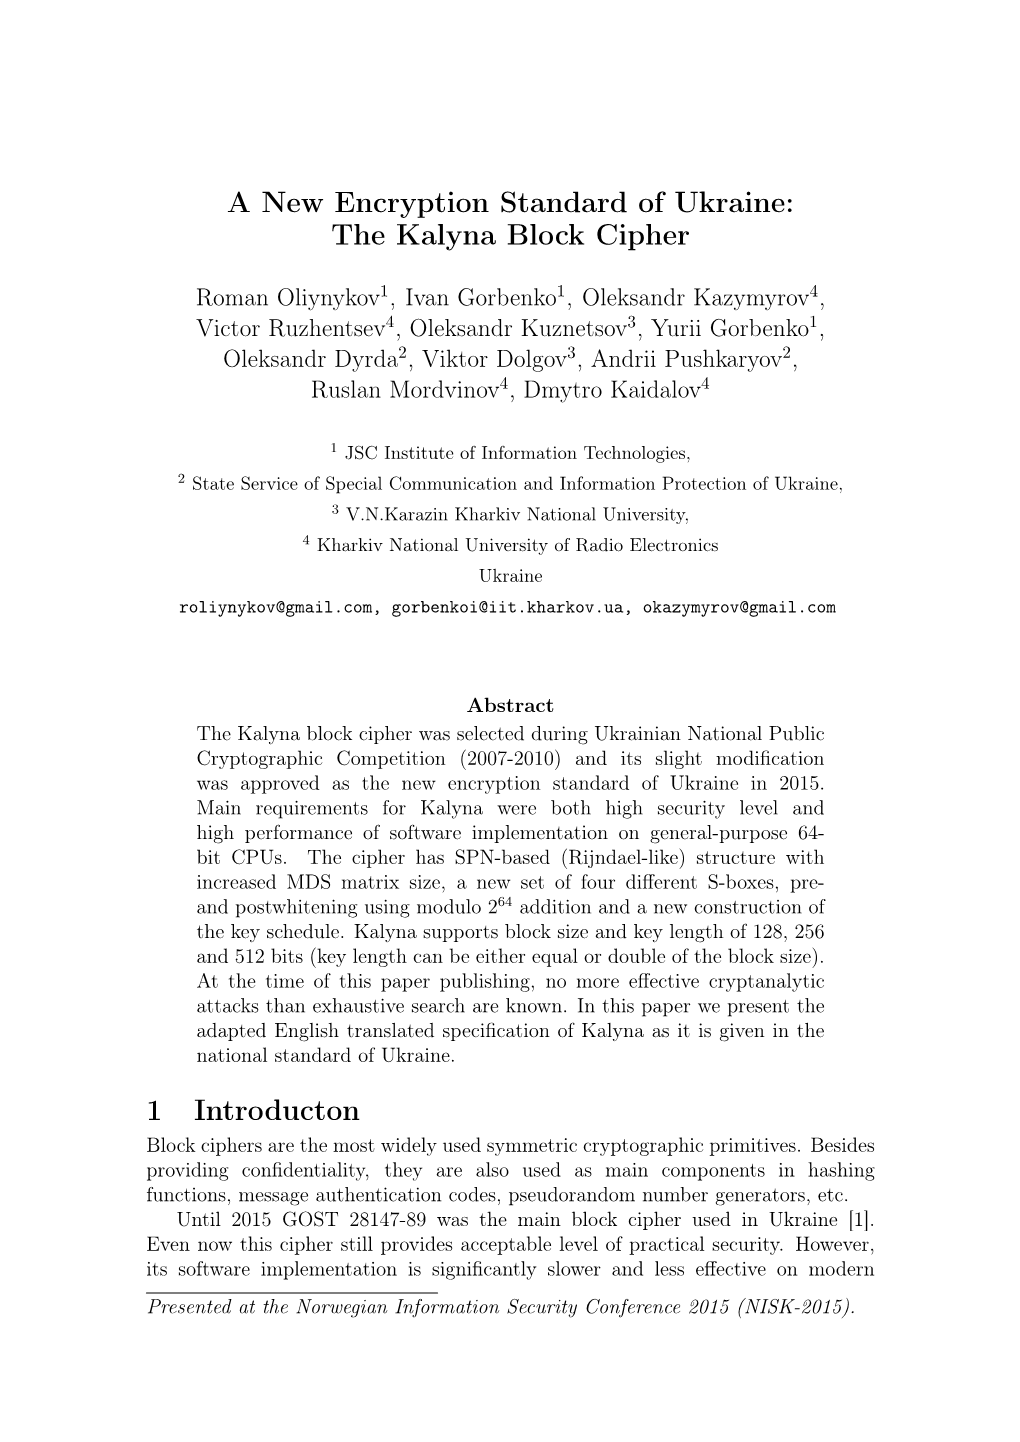 A New Encryption Standard of Ukraine: the Kalyna Block Cipher 1